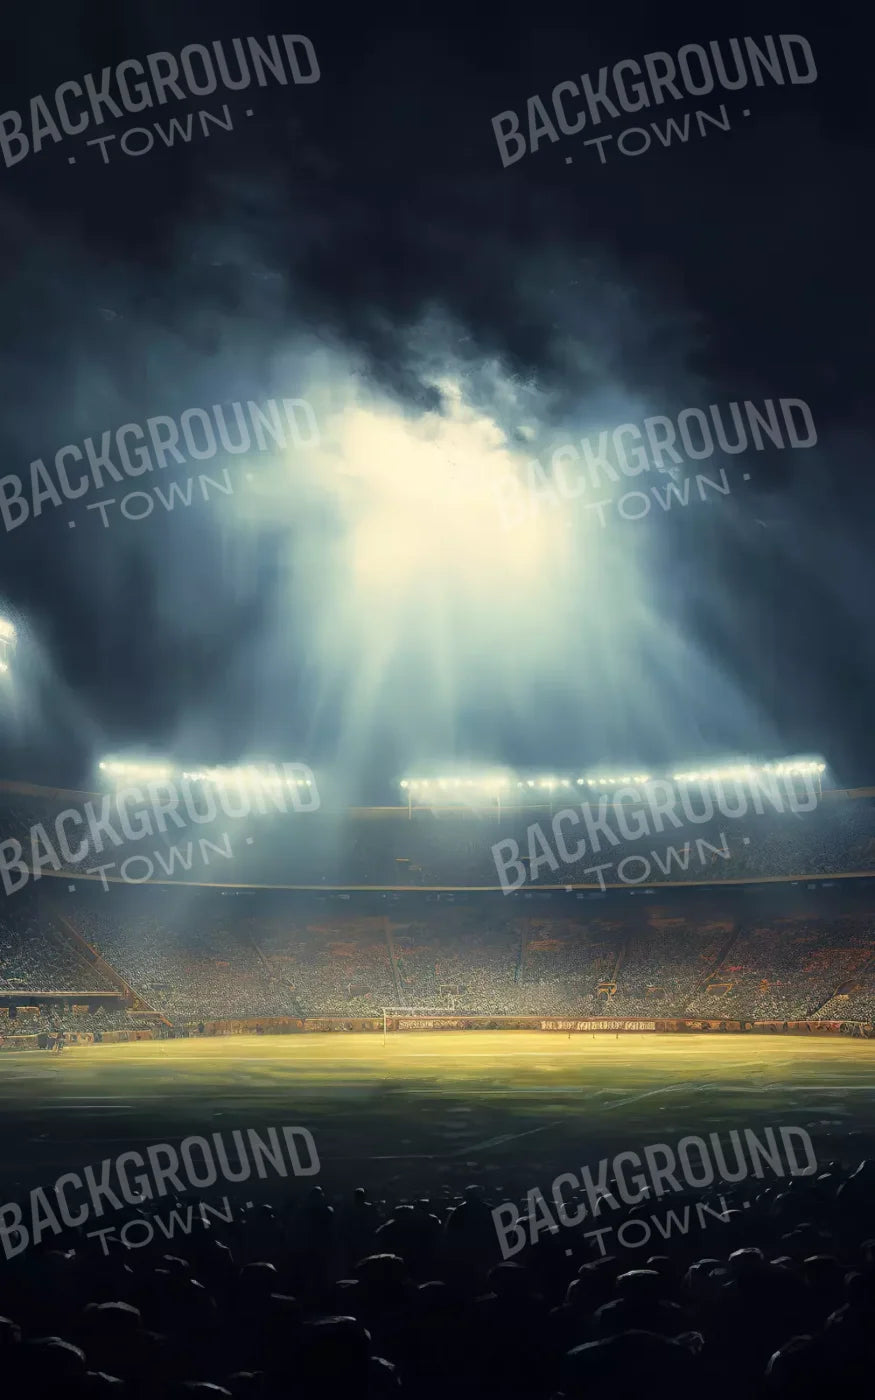 Sports Stadium Friday Night Lights I 5’X8’ Ultracloth (60 X 96 Inch) Backdrop